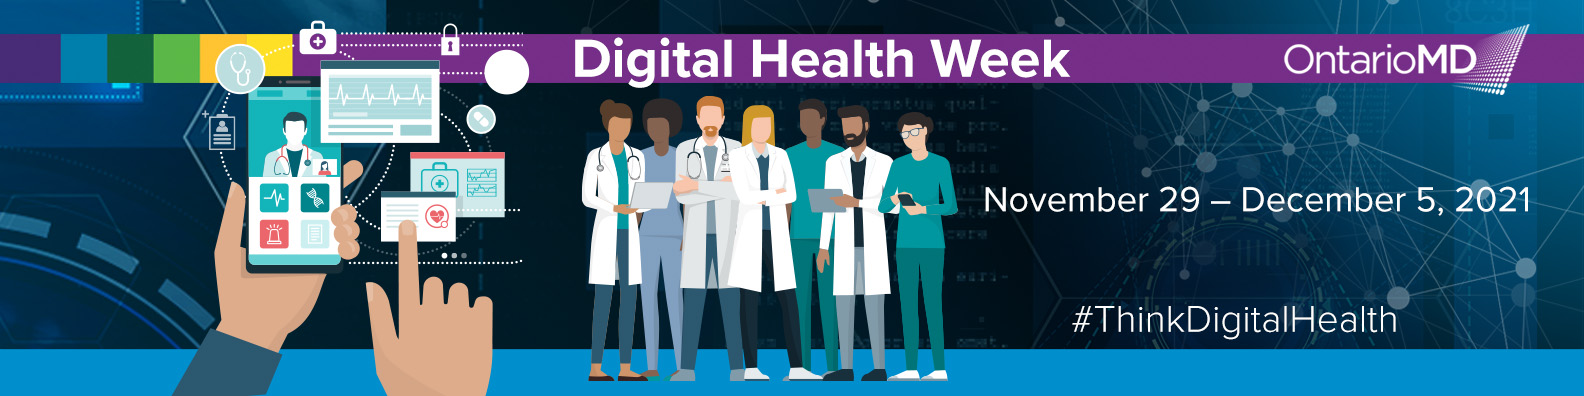 Digital Health Week 2021 LinkedIn-Banner-1584x396.jpg